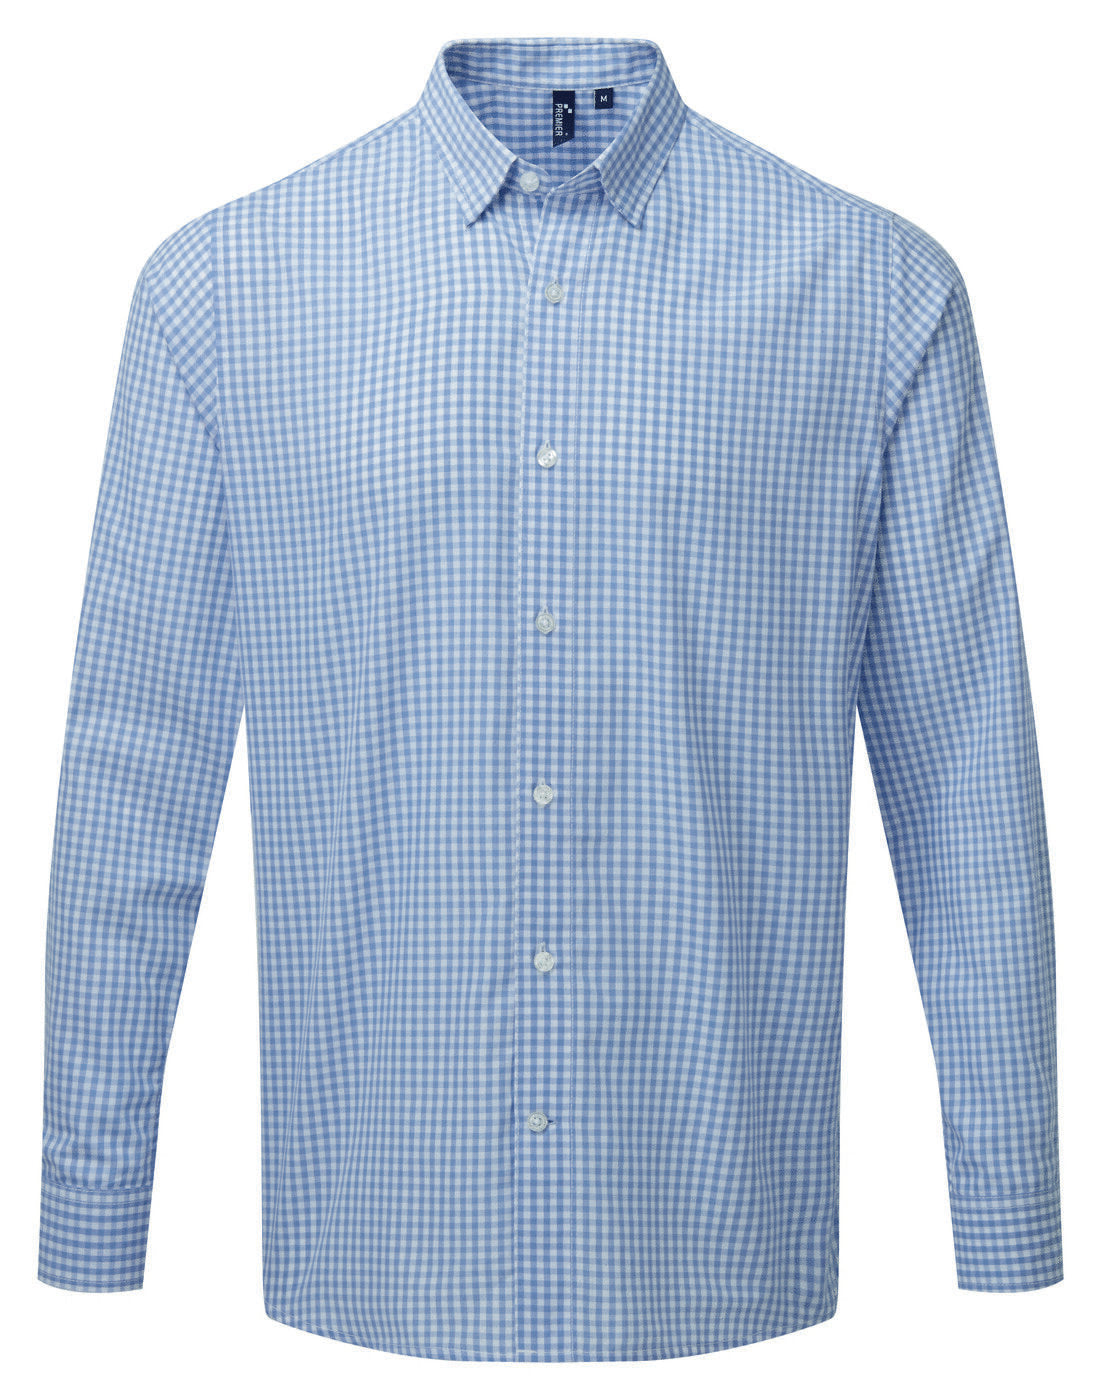 Premier 'Maxton' Check - Men's Long Sleeve Shirt